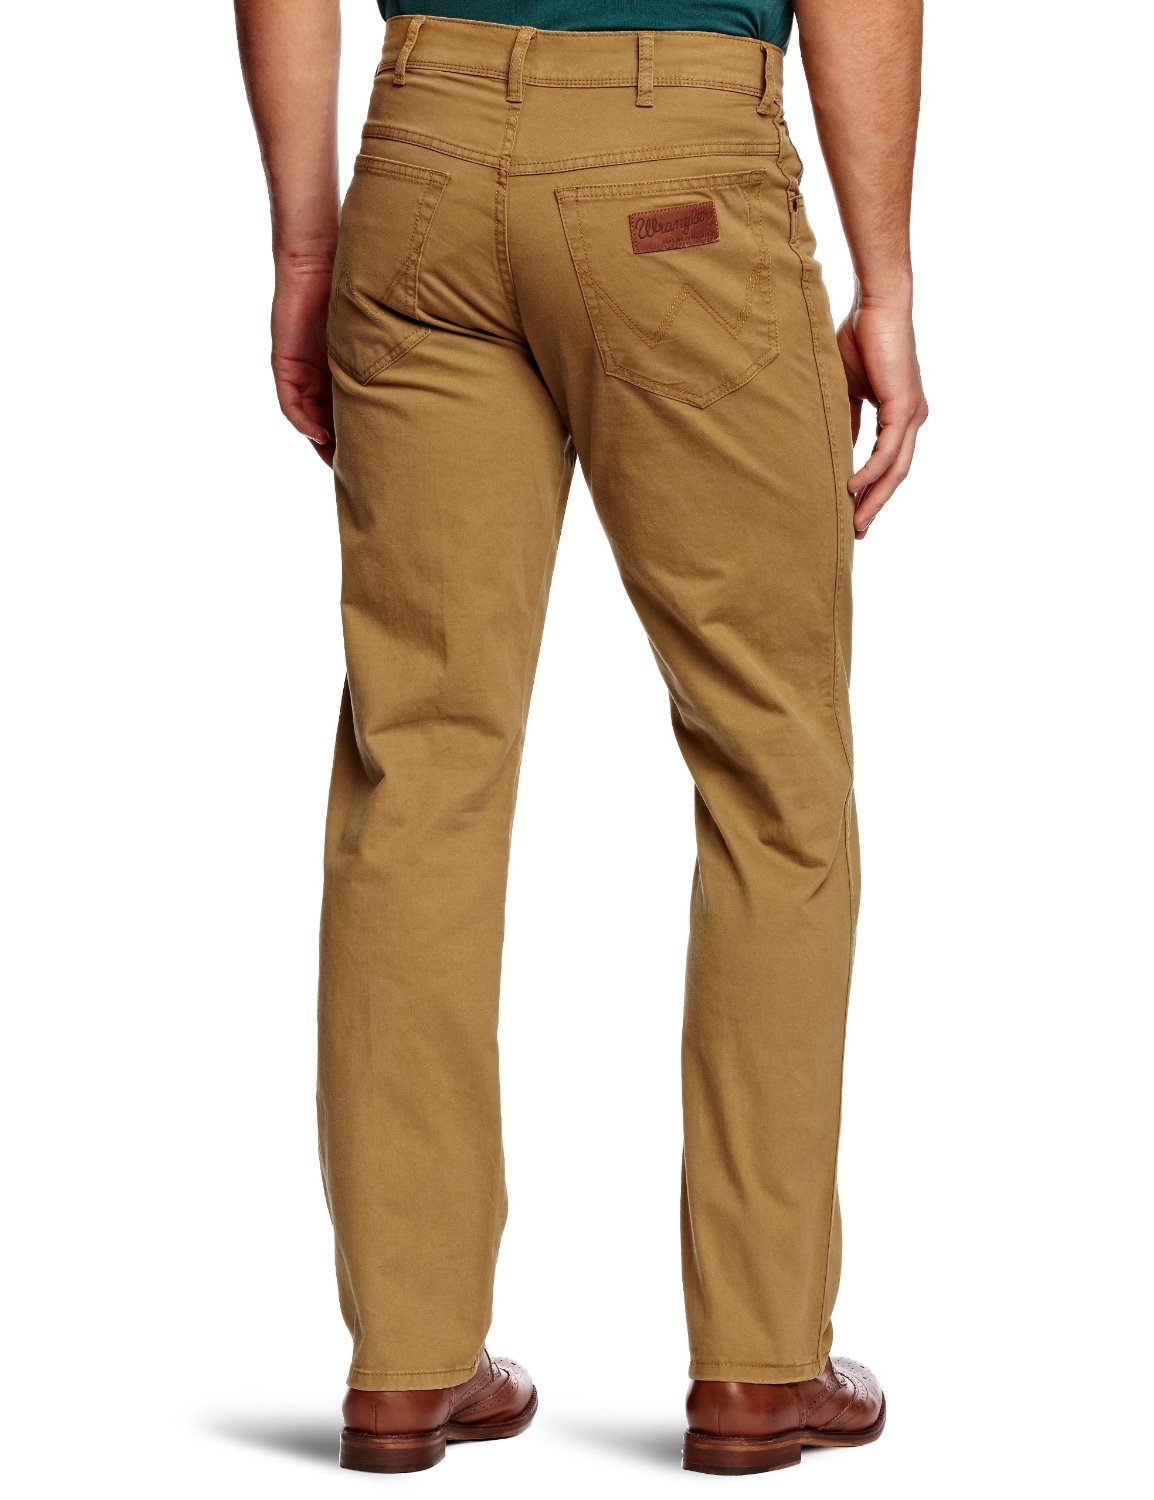 New Wrangler Men's Texas Stretch Jeans Khaki Nut Soft Fabric ...